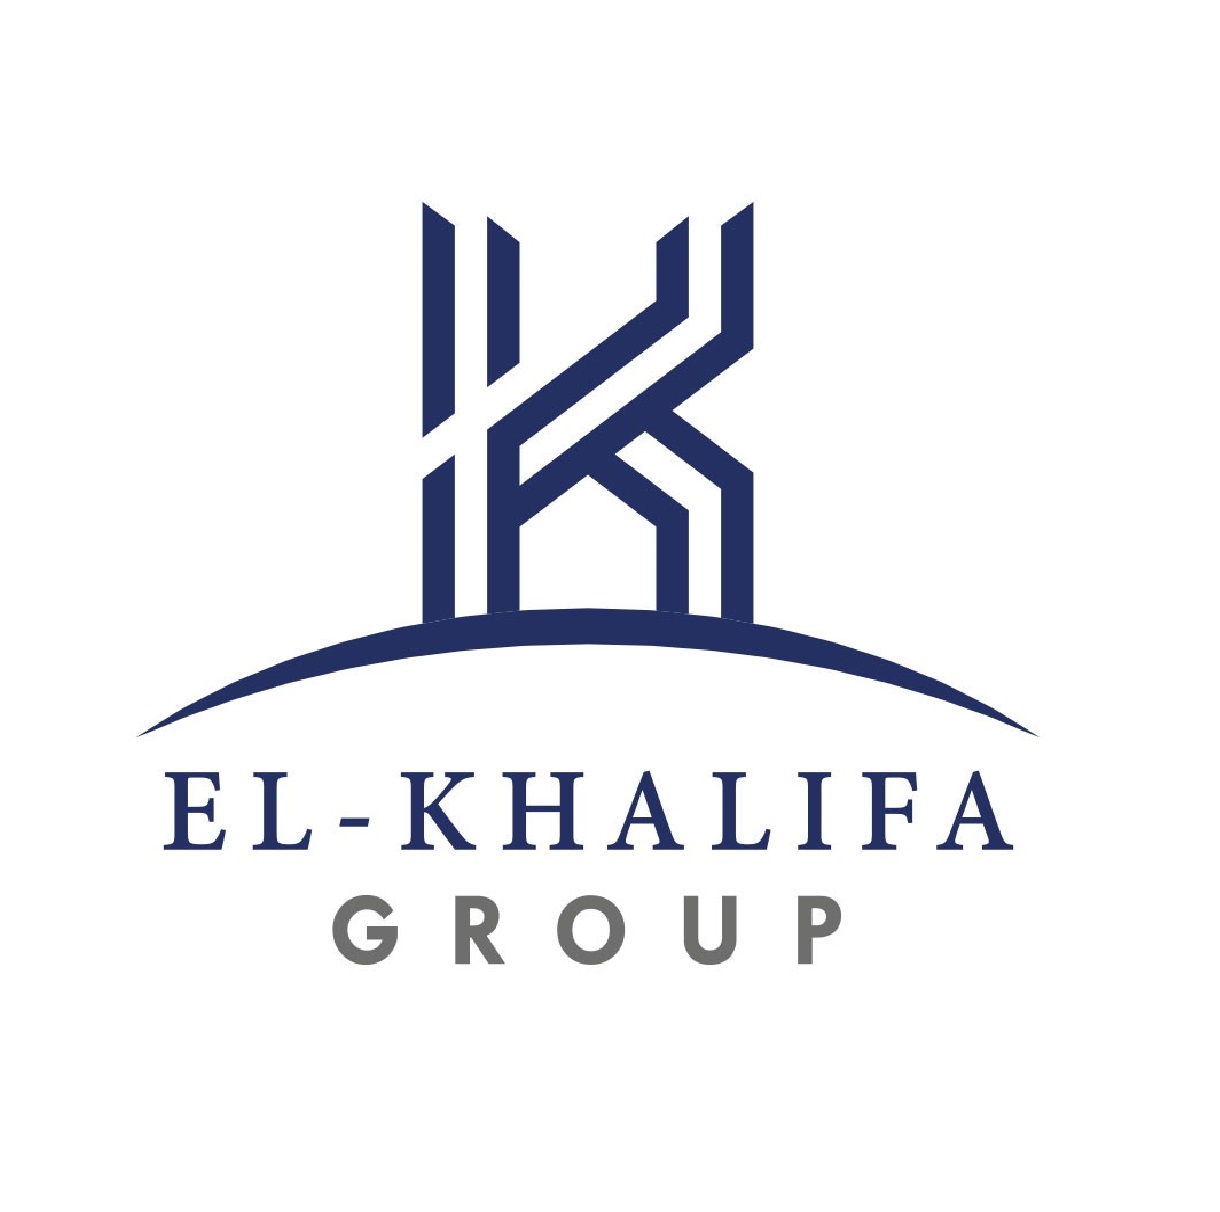 El khalifa Group